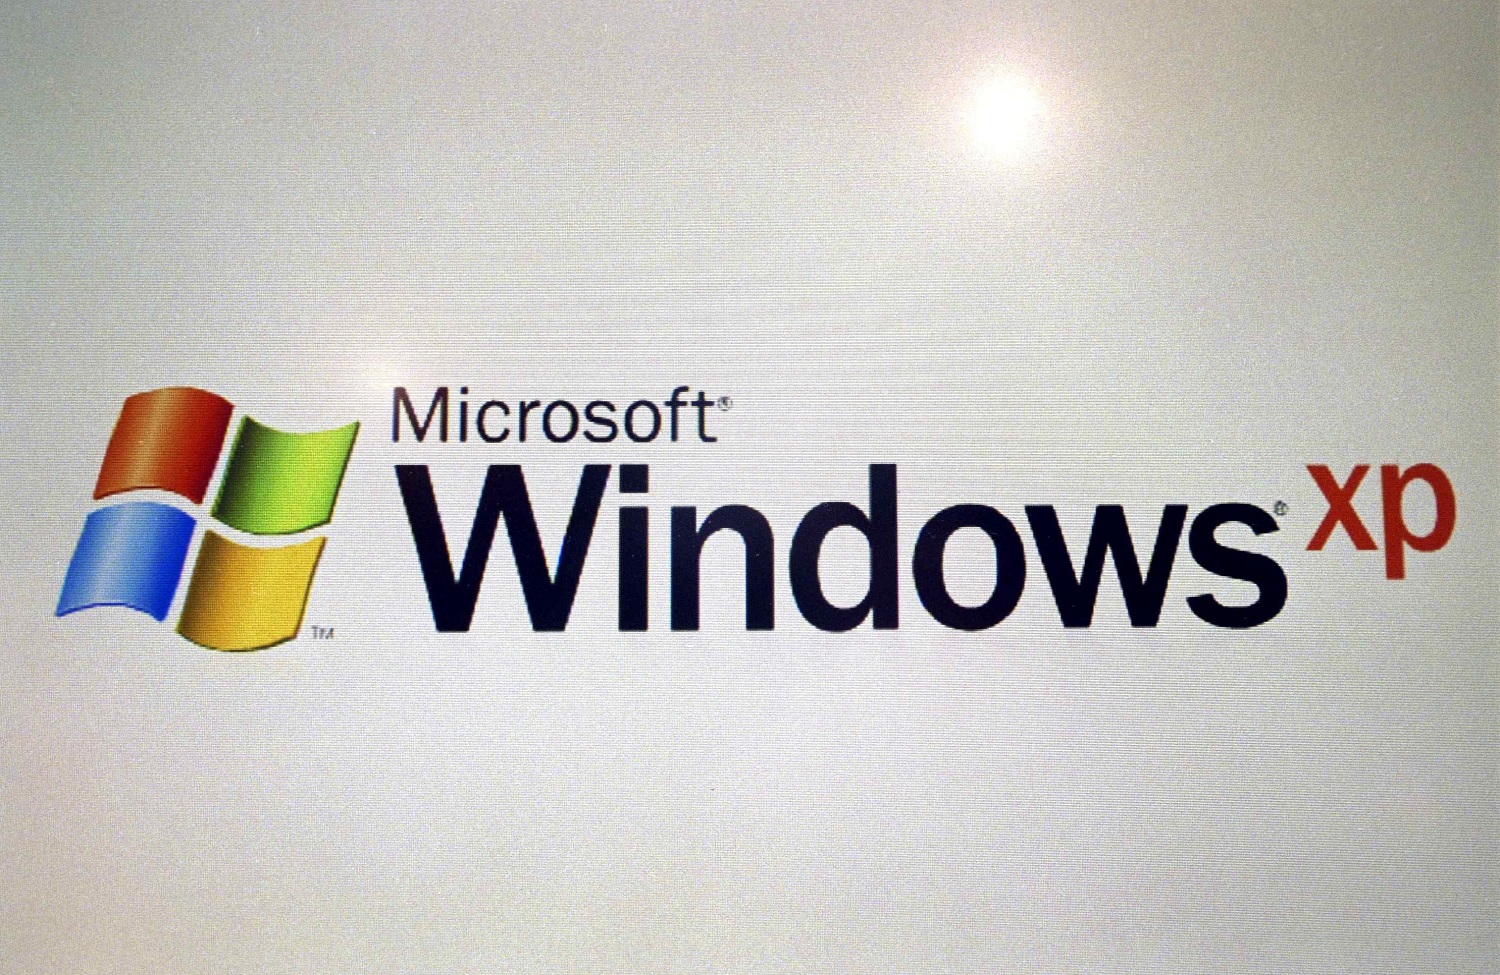 MICROSOFT WINDOWS XP OPERATING SYSTEM - OCT 2001